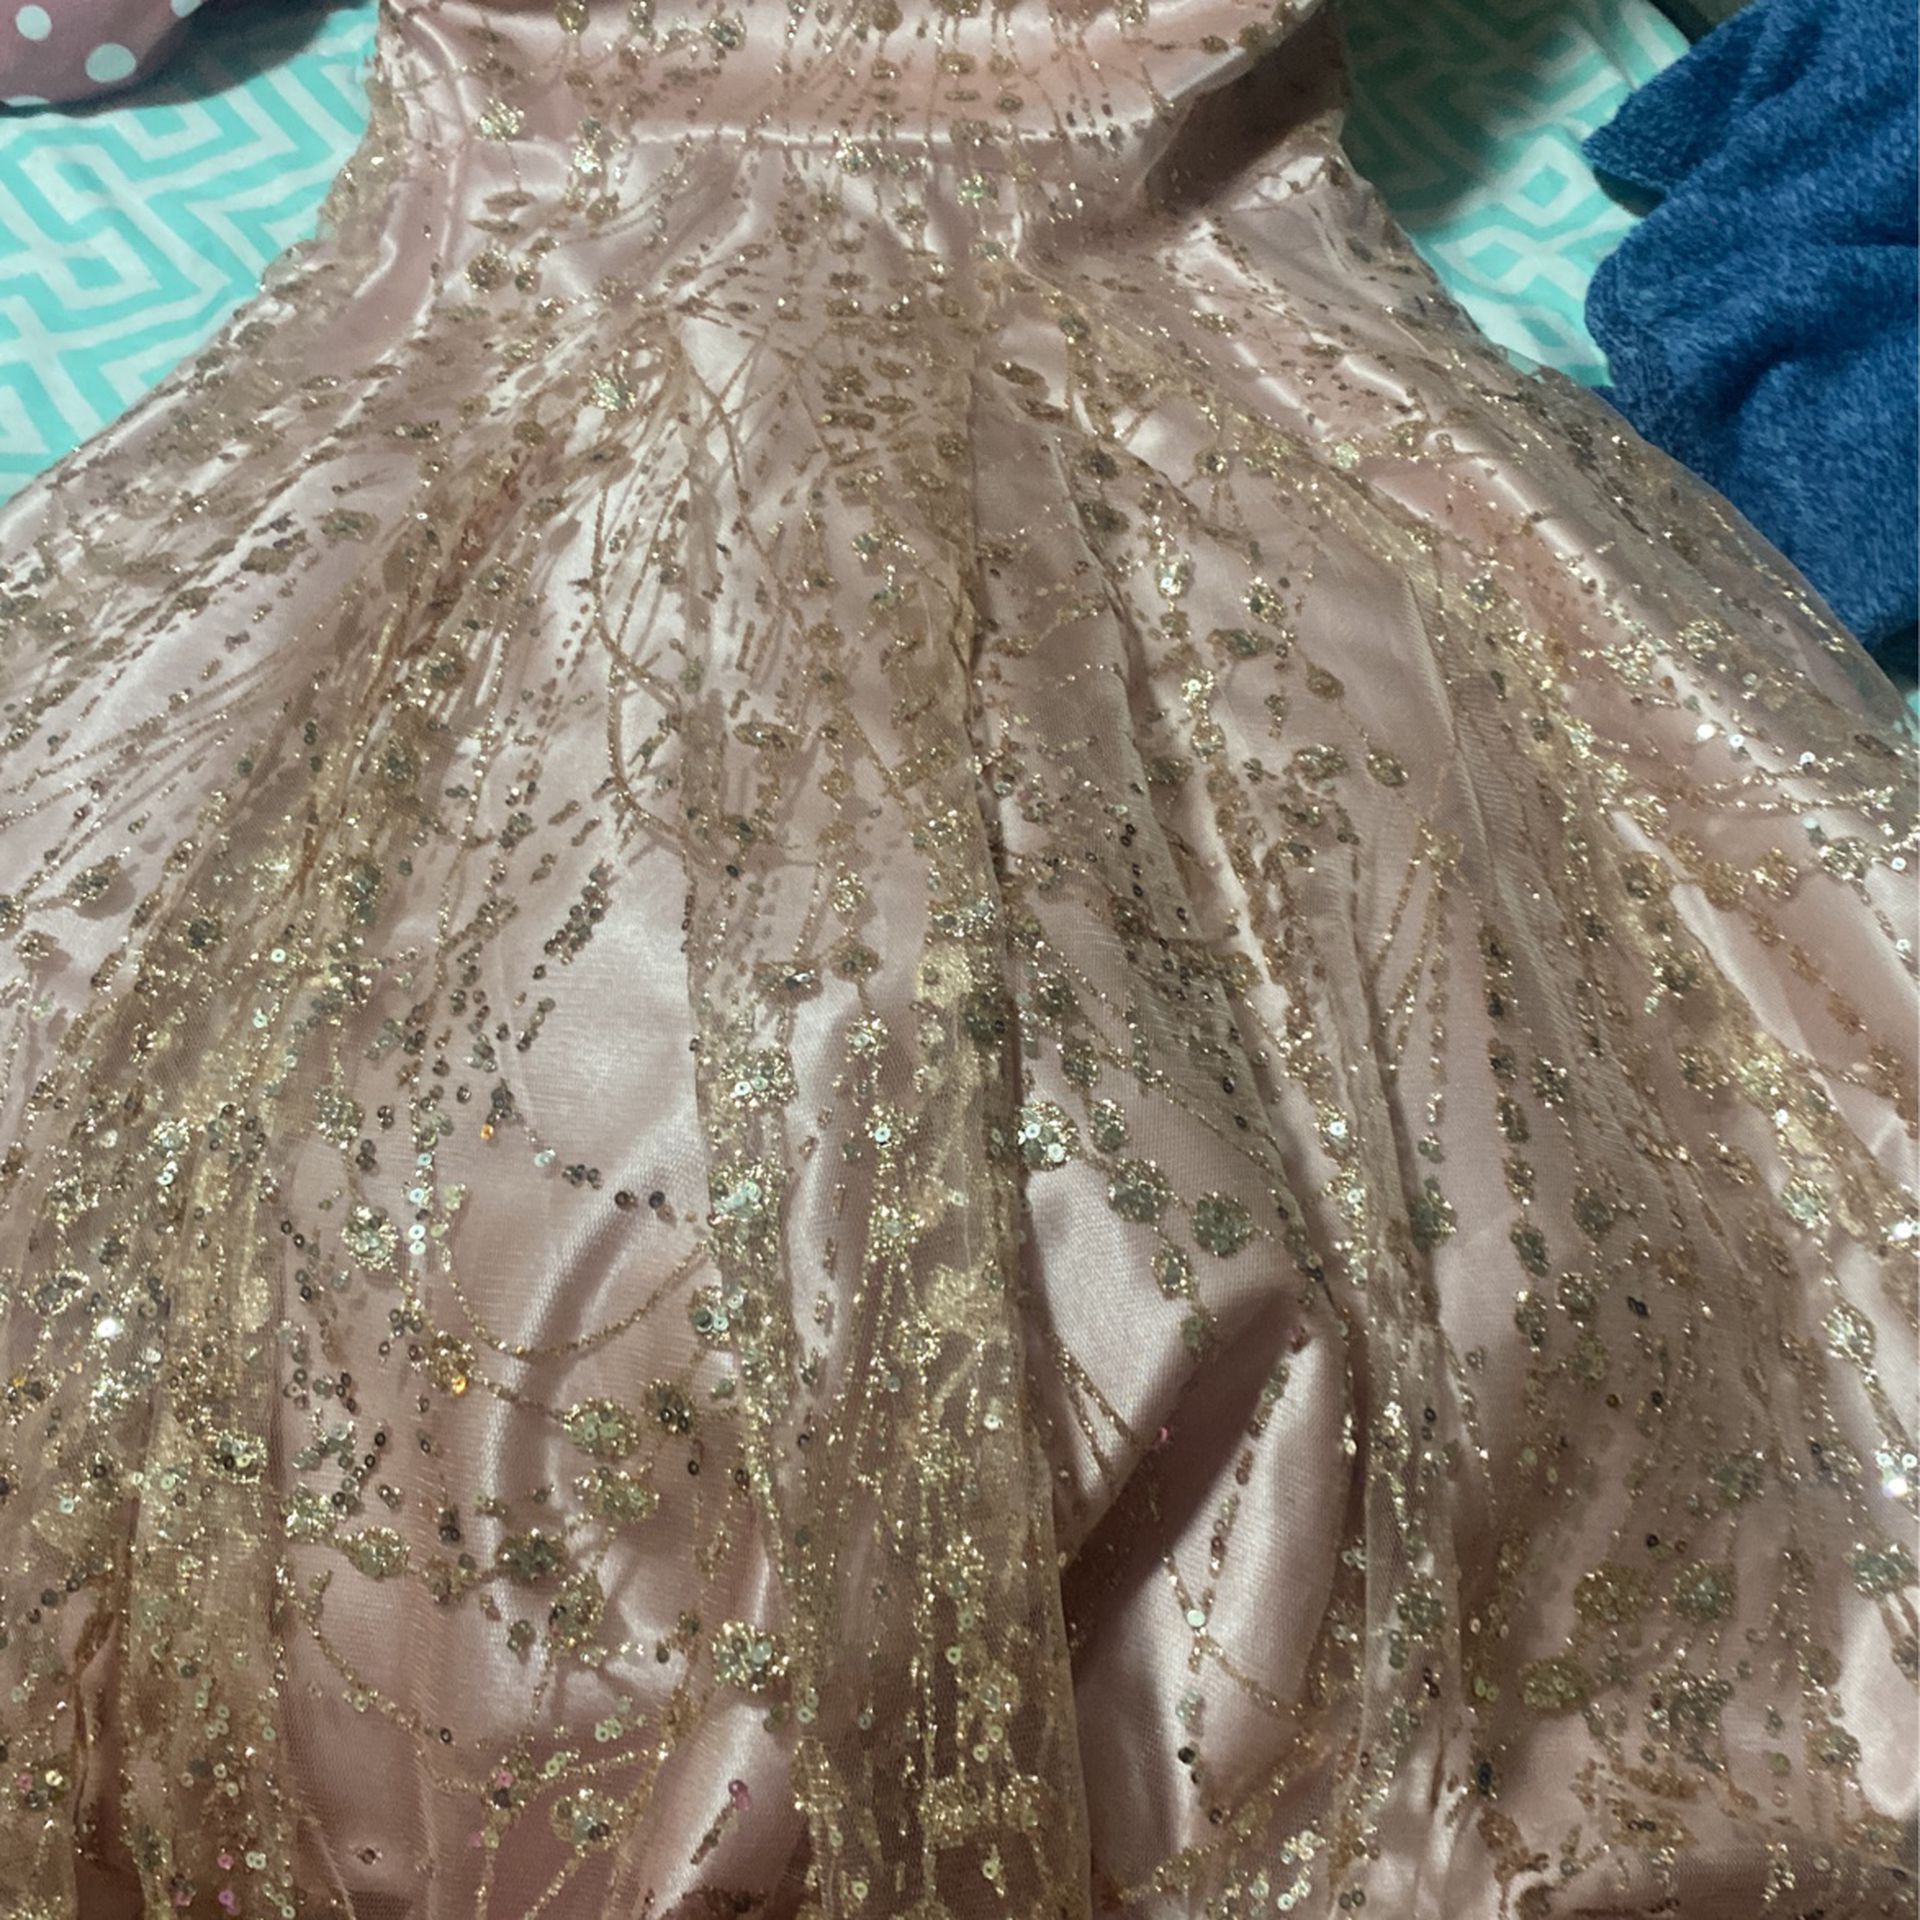 Prom Dress Size 2